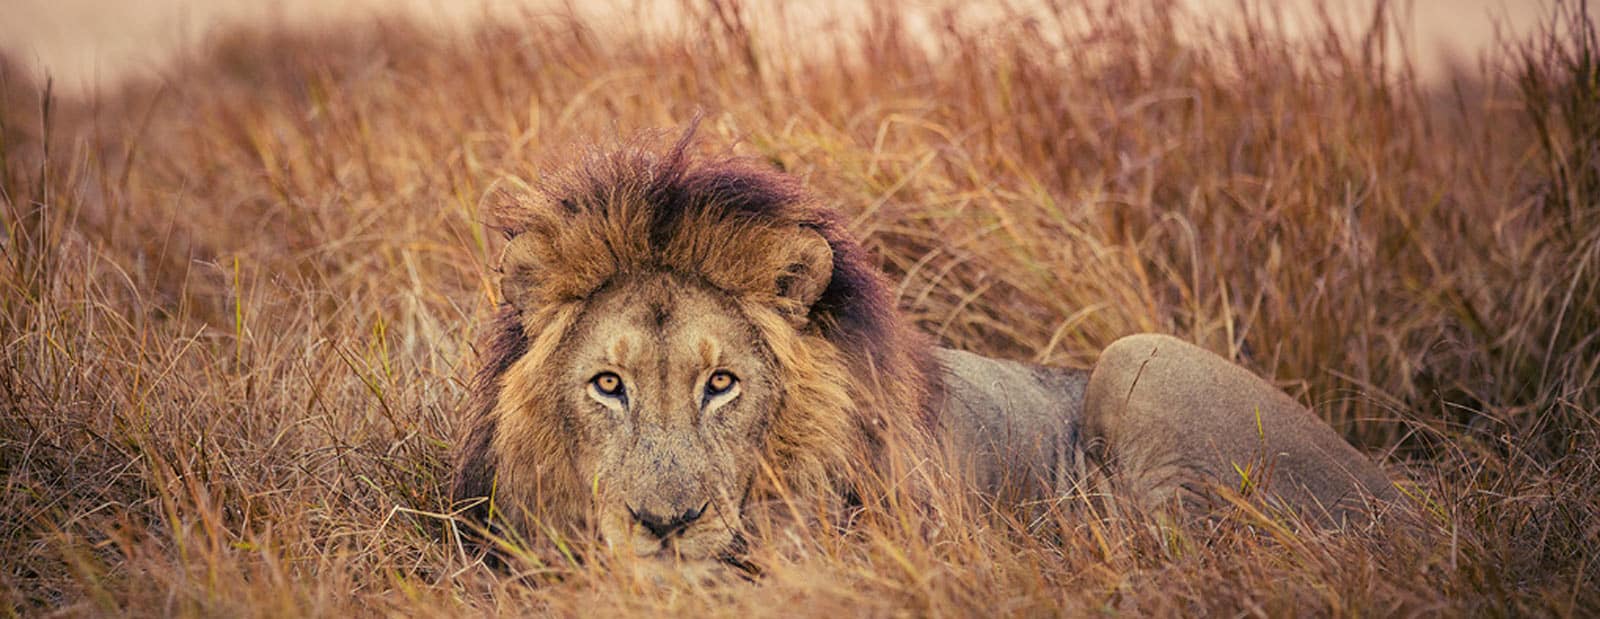 8 Days Tanzania wildlife safari